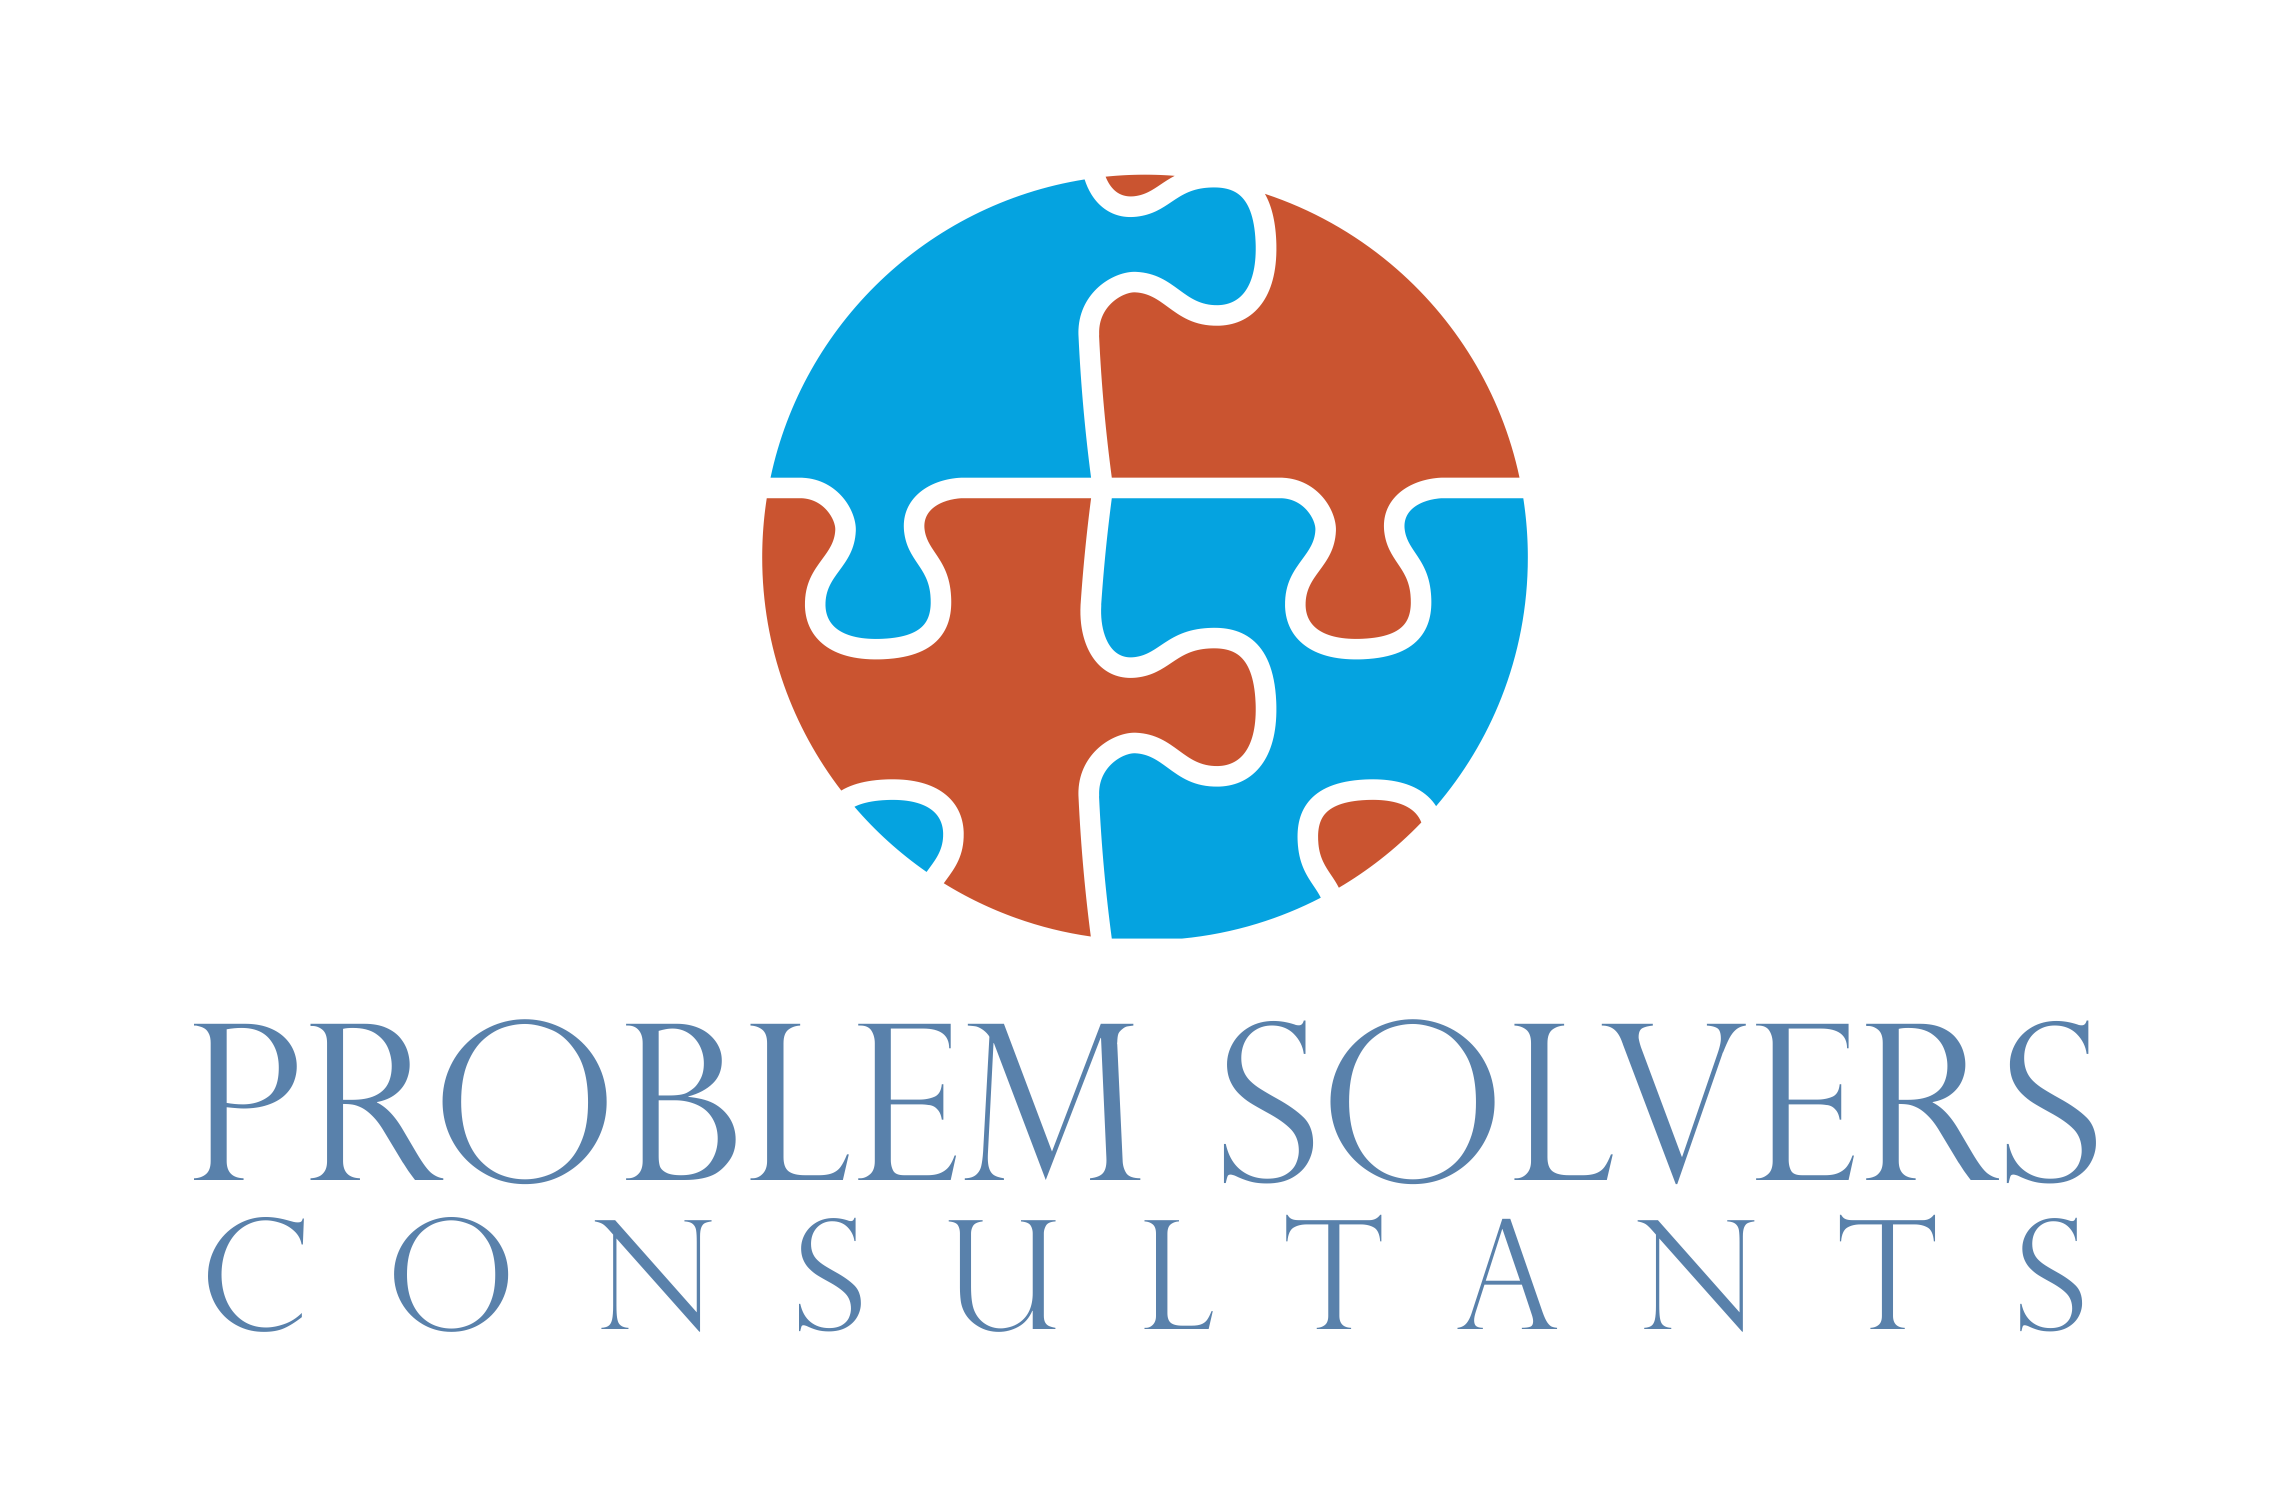 Problem Solver's Consultants